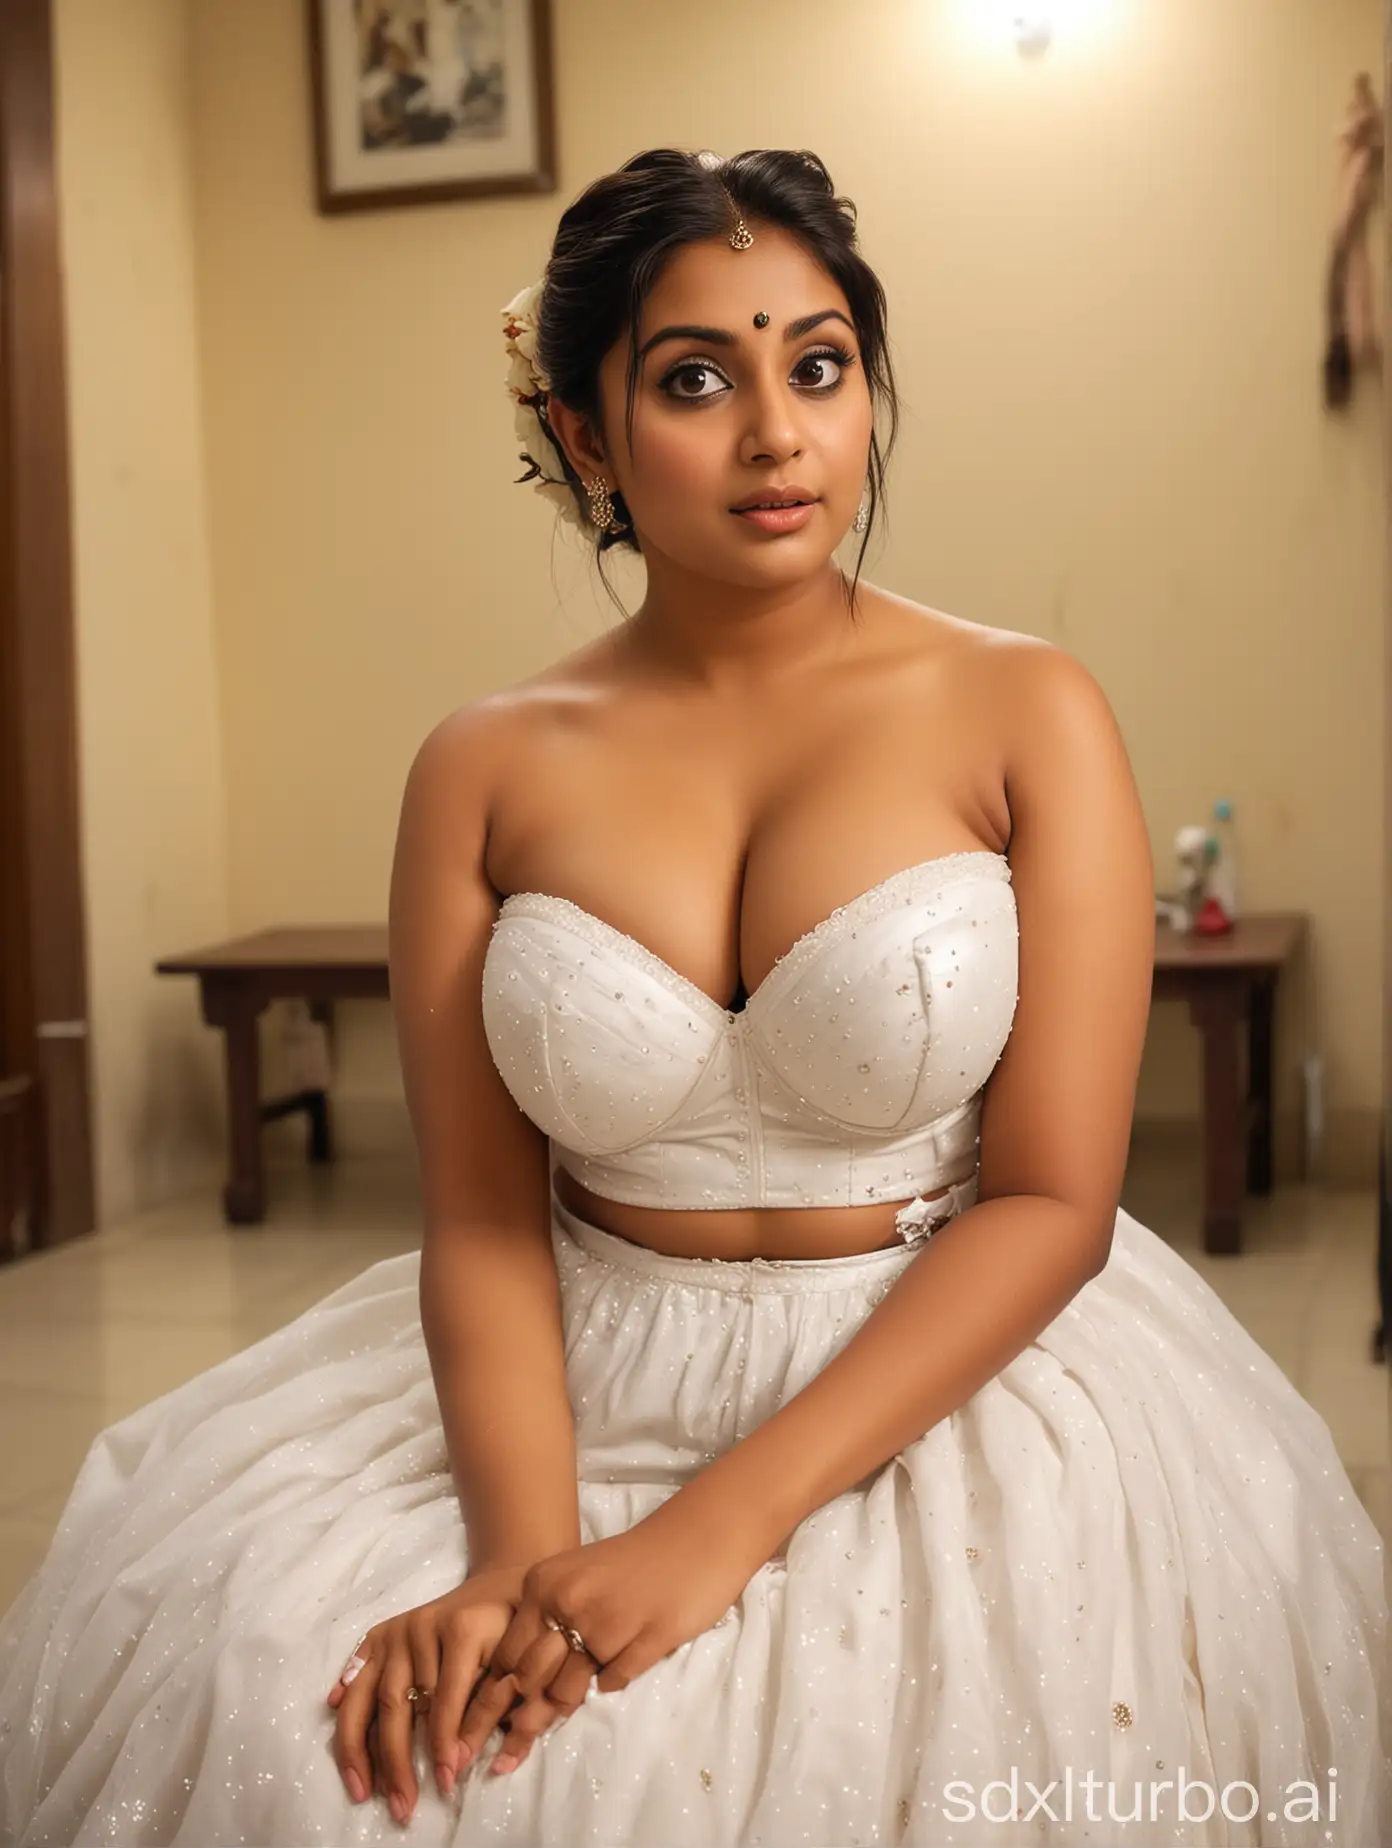 Voluptuous-Indian-Bride-in-Bridal-Attire-Sitting-in-WellLit-Dressing-Room